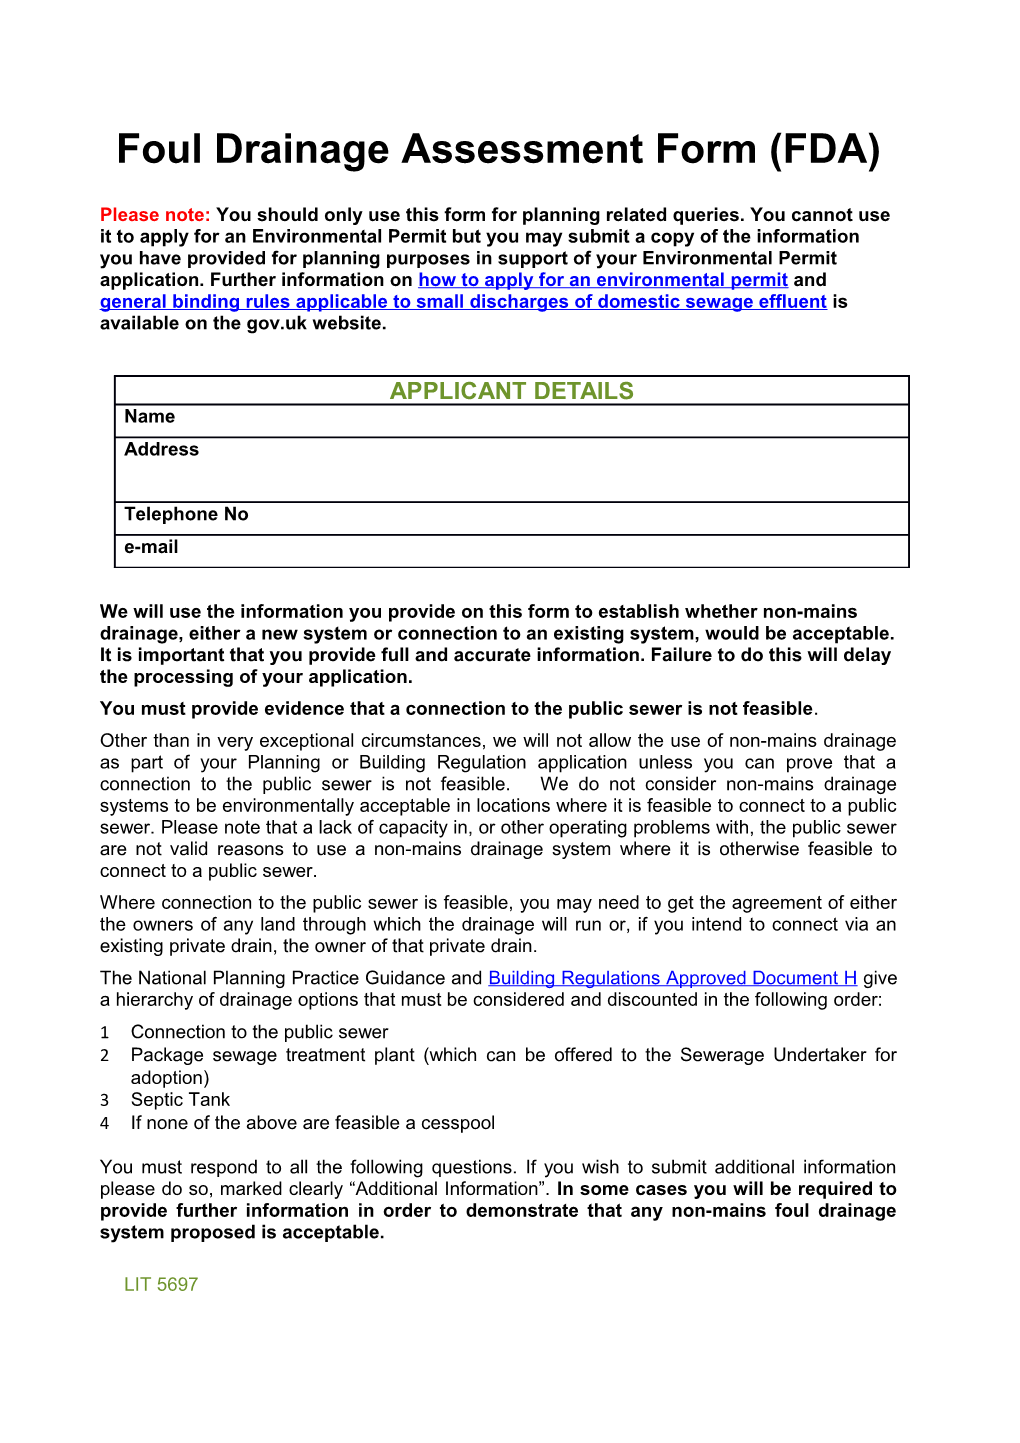 LIT 5697 Foul Drainage Assessment Form